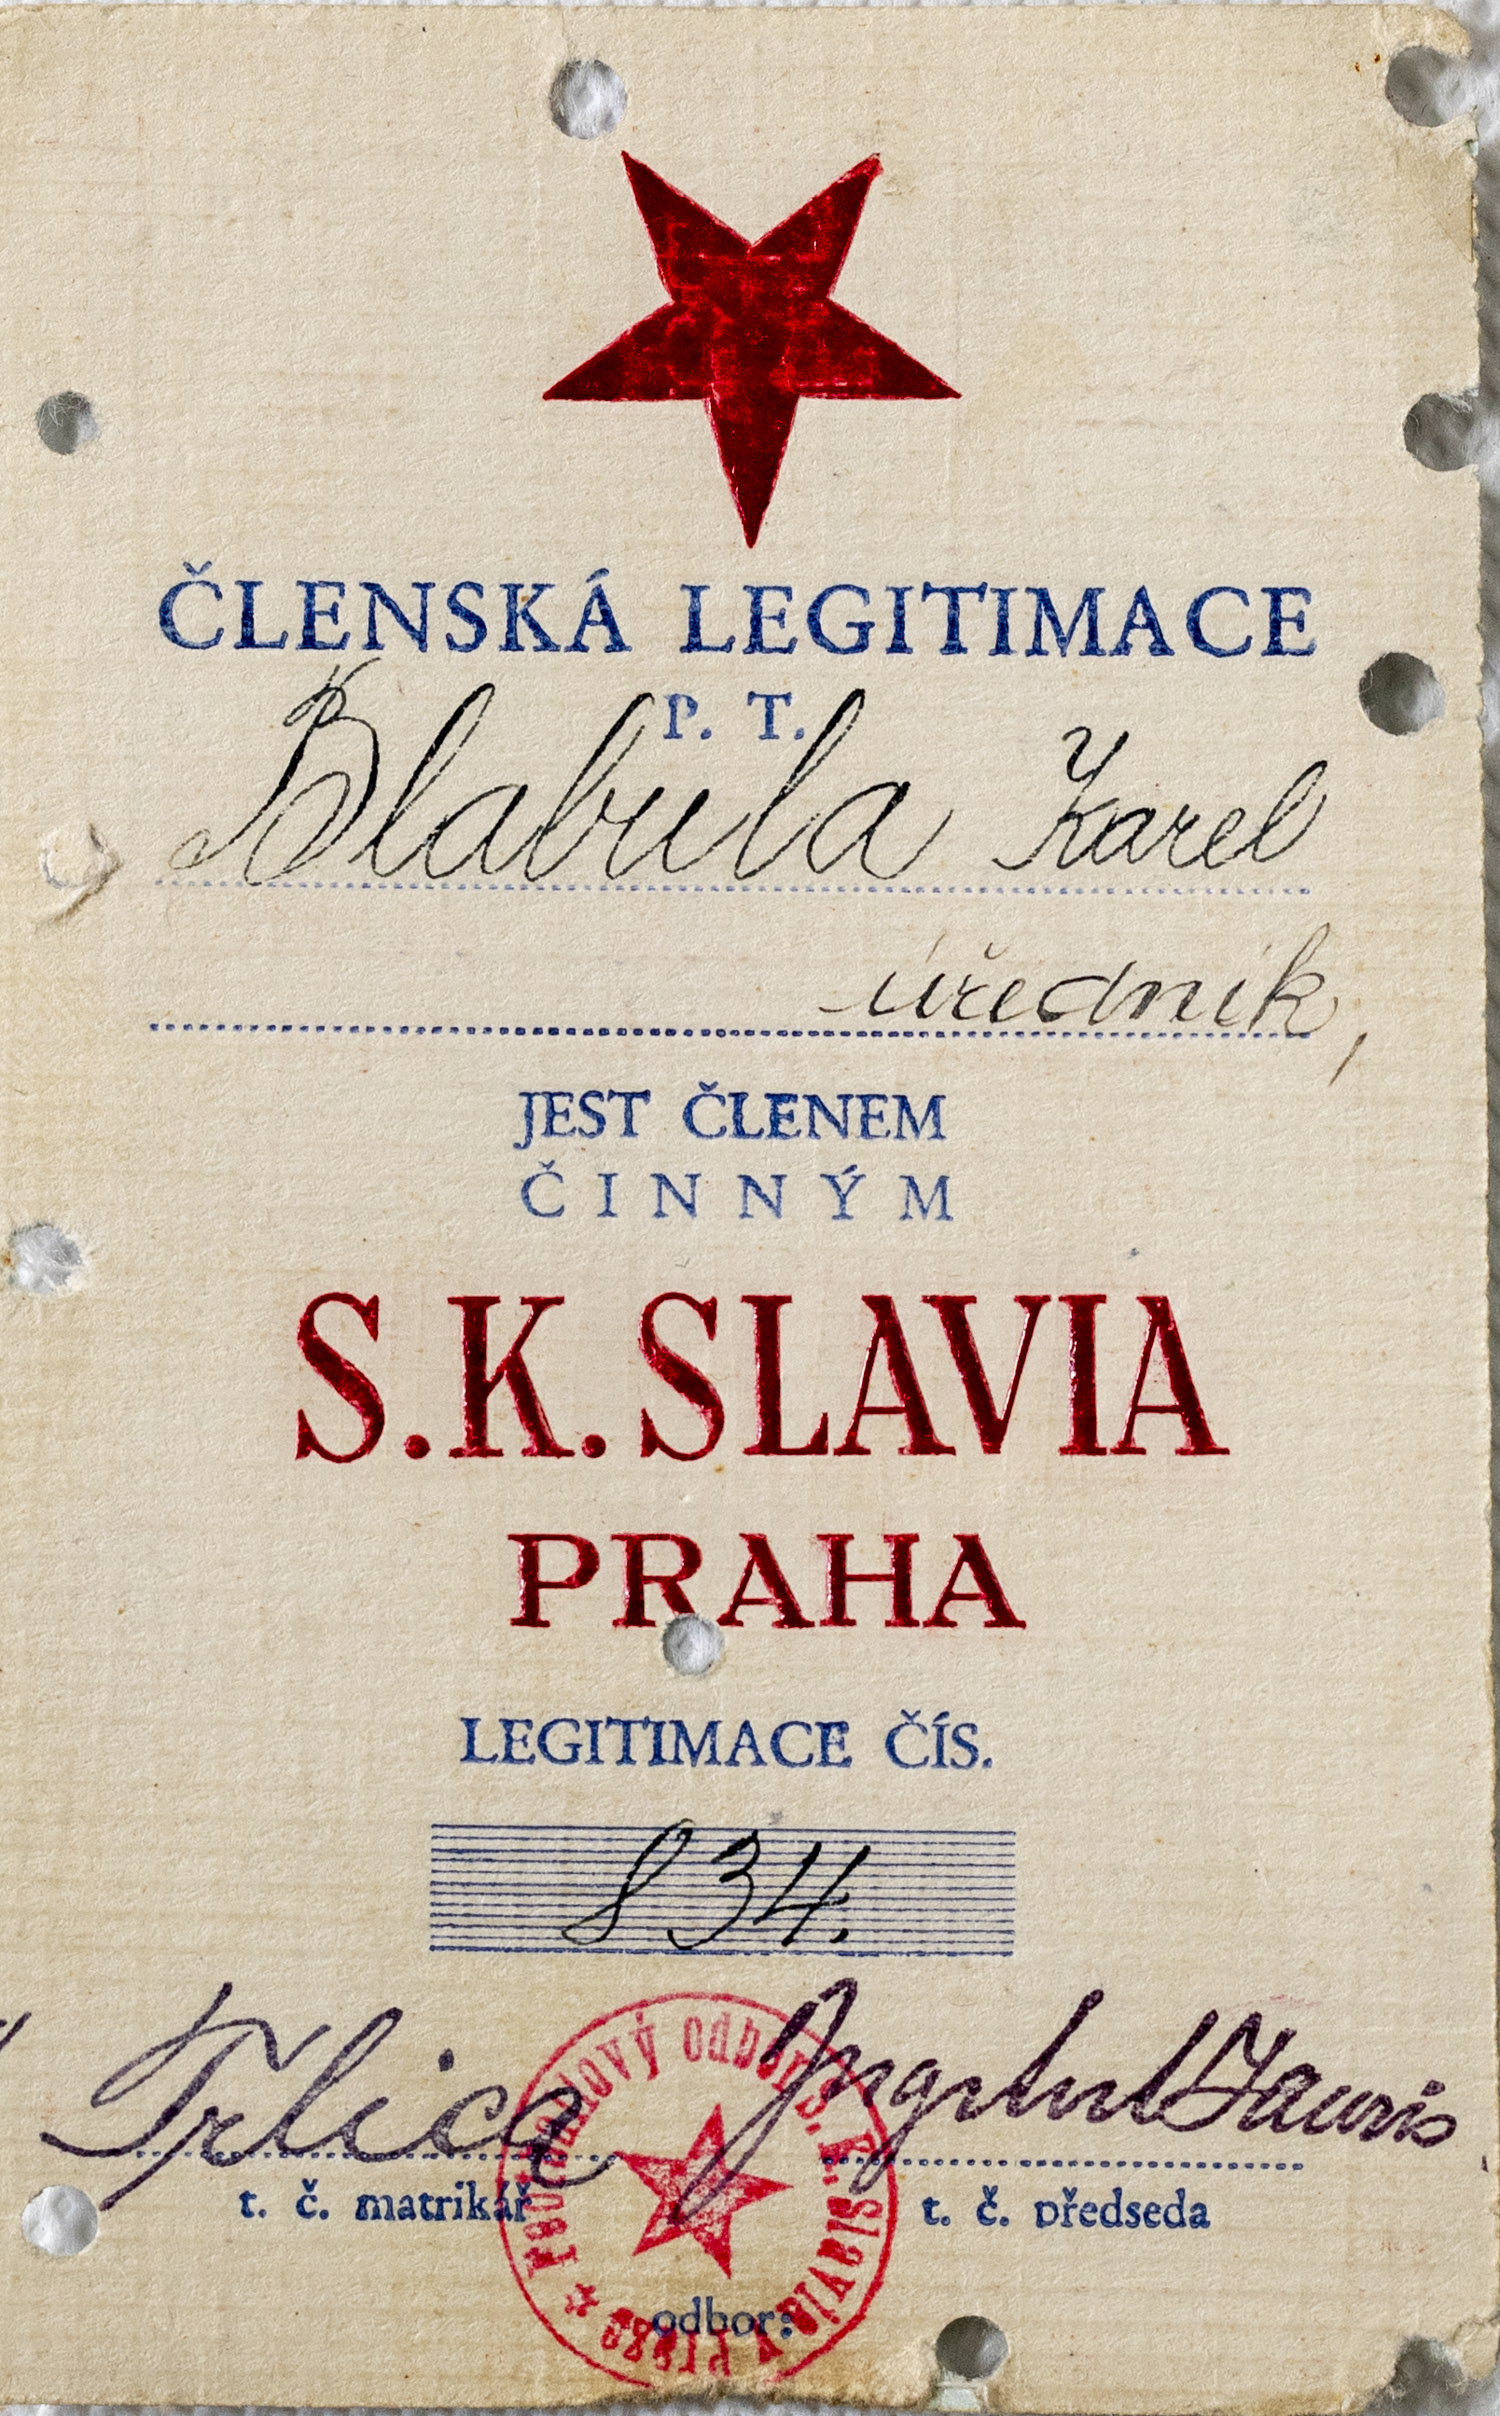 Členská legitimace P.T. klubu S.K.SLAVIA PRAHA z roku 1933